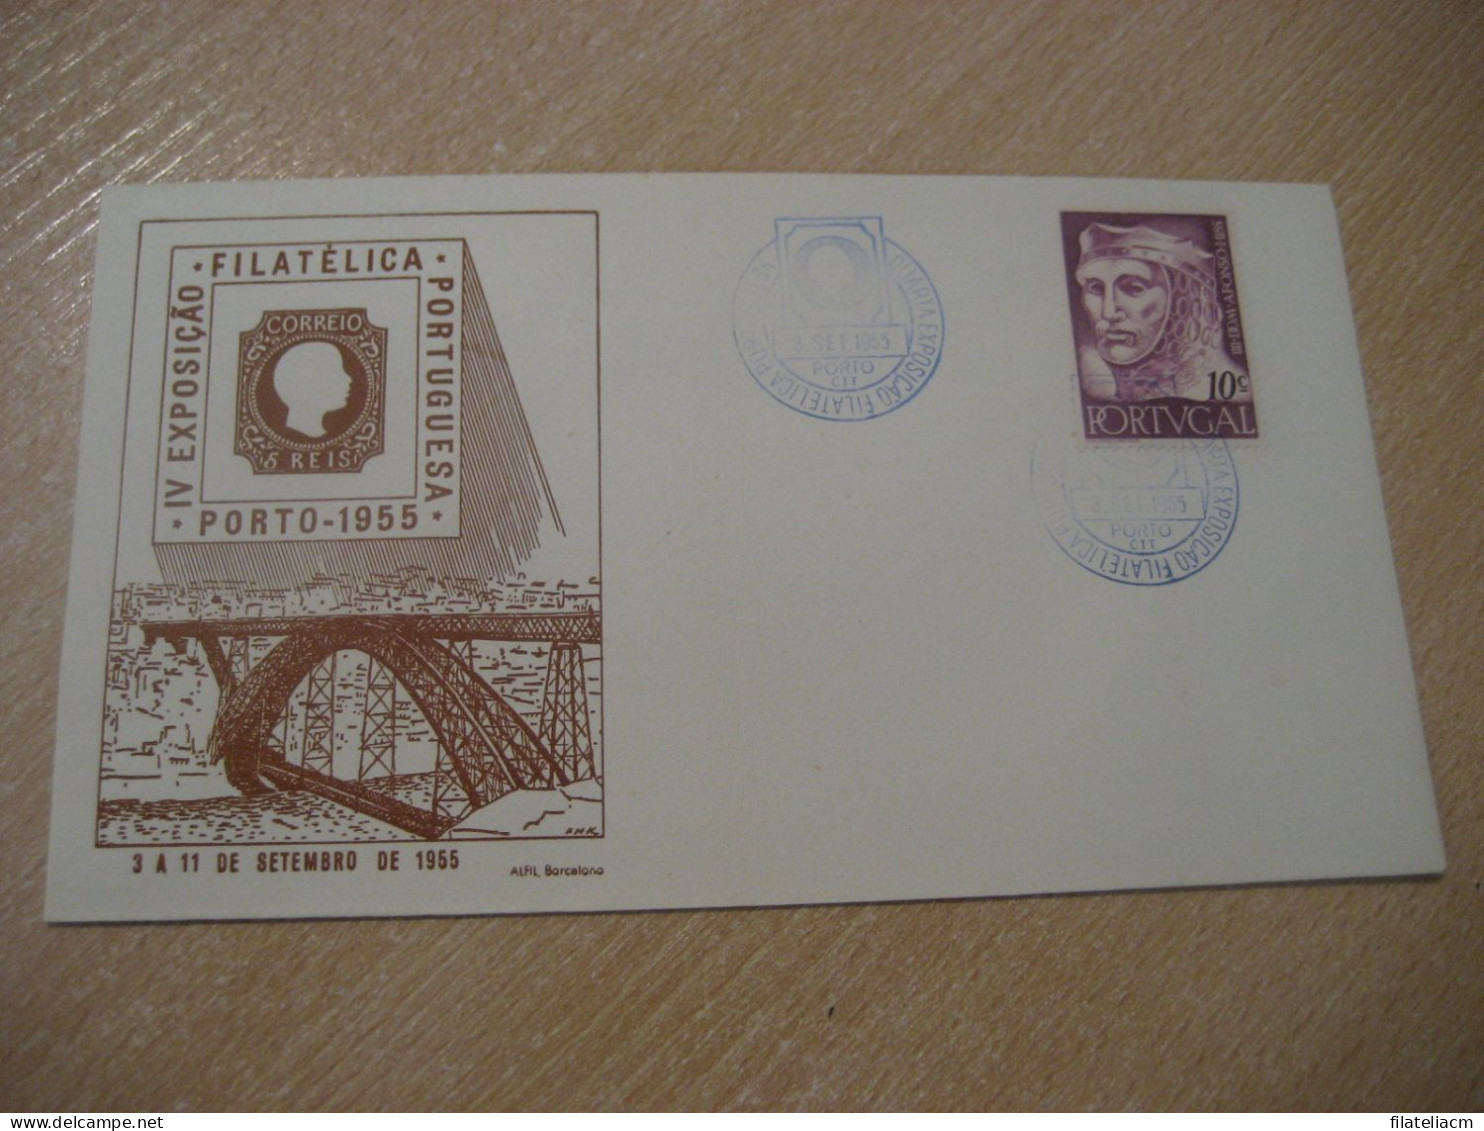 PORTO 1955 Expo Filatelica Stamp Bridge Cancel Cover PORTUGAL - Briefe U. Dokumente